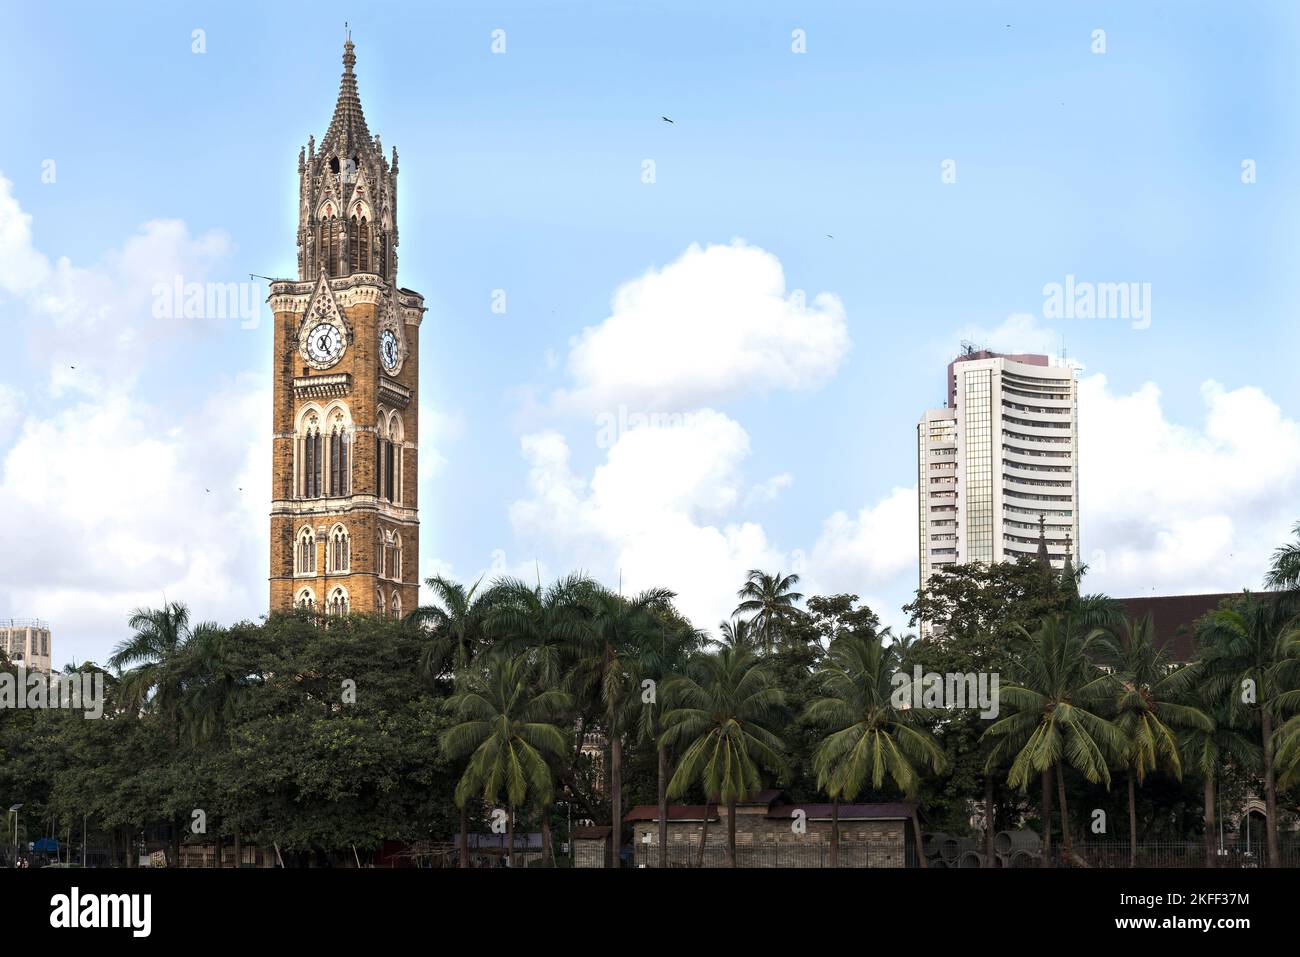 Rajabai Clock Tower and Bombay Stock Exchange, Bombay, Mumbai, Maharashtra, India Stock Photo